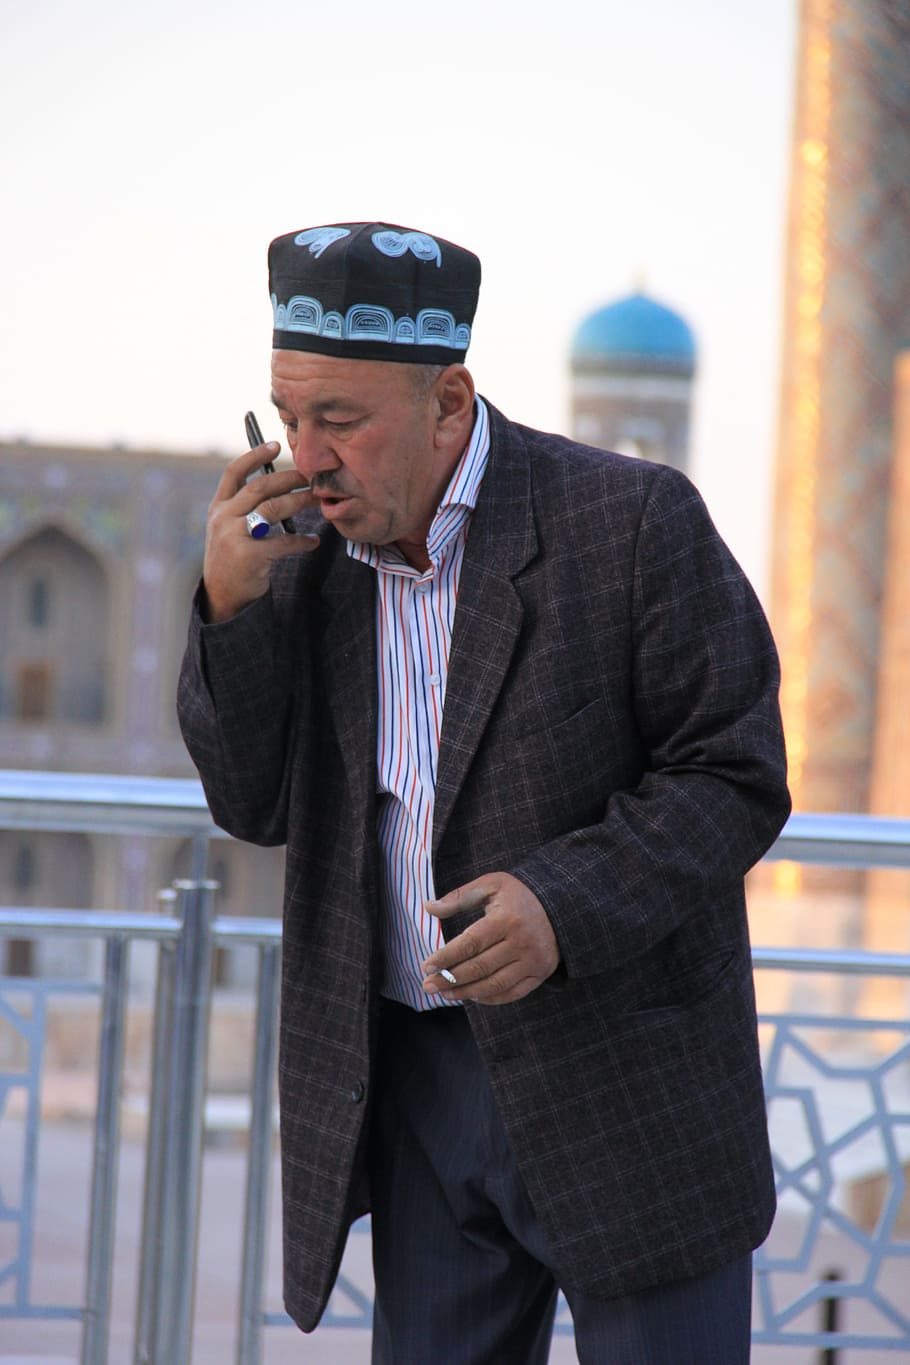 Uzbek, Uzbekistan, Men'S, S, Man, Phone, man, shop, negotiation, attention, elderly